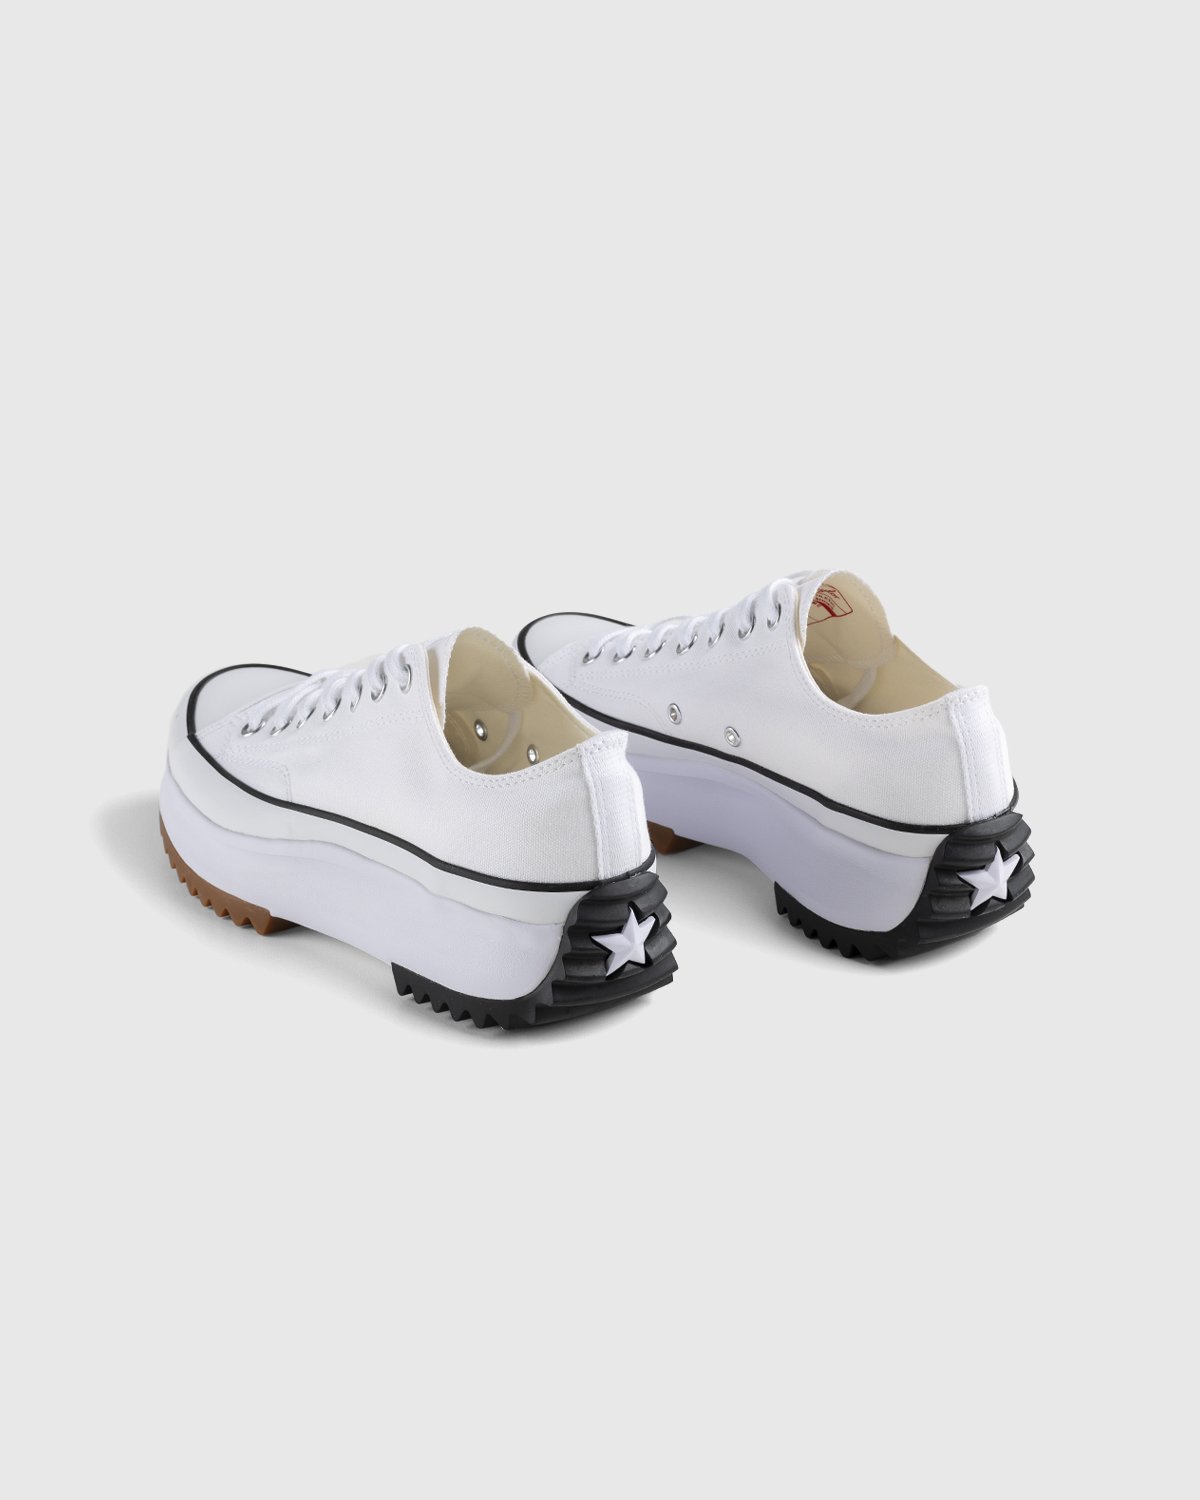 Converse - Run Star Hike Platform White Black Gum - Footwear - White - Image 4